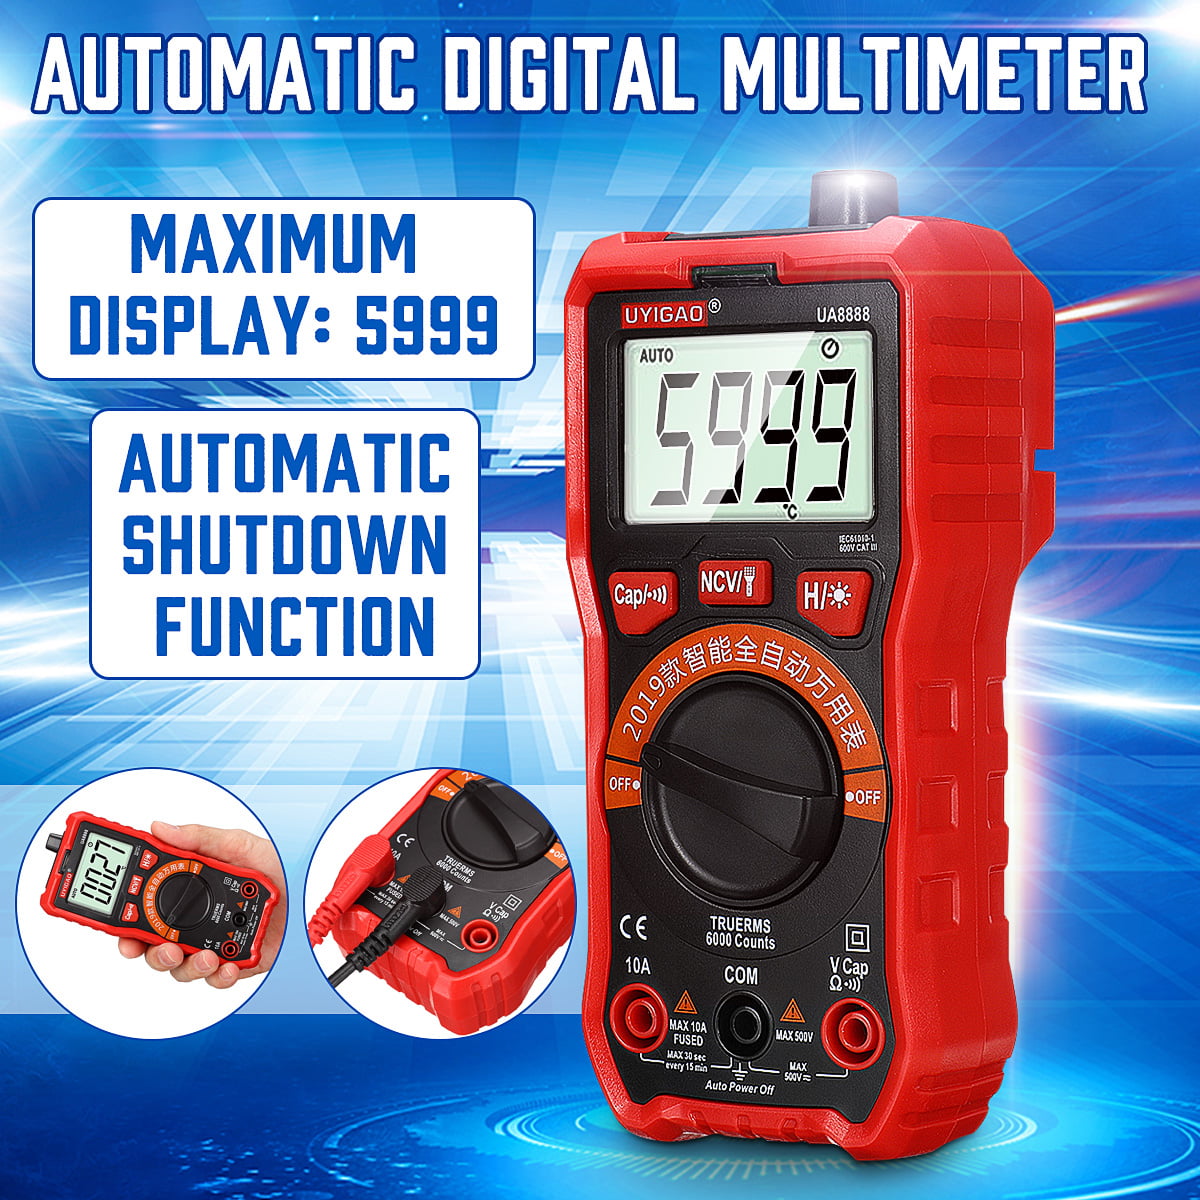 UA8888 Red Backlight Display Automatic Digital Multimeter DC/AC Voltage Current Meter 